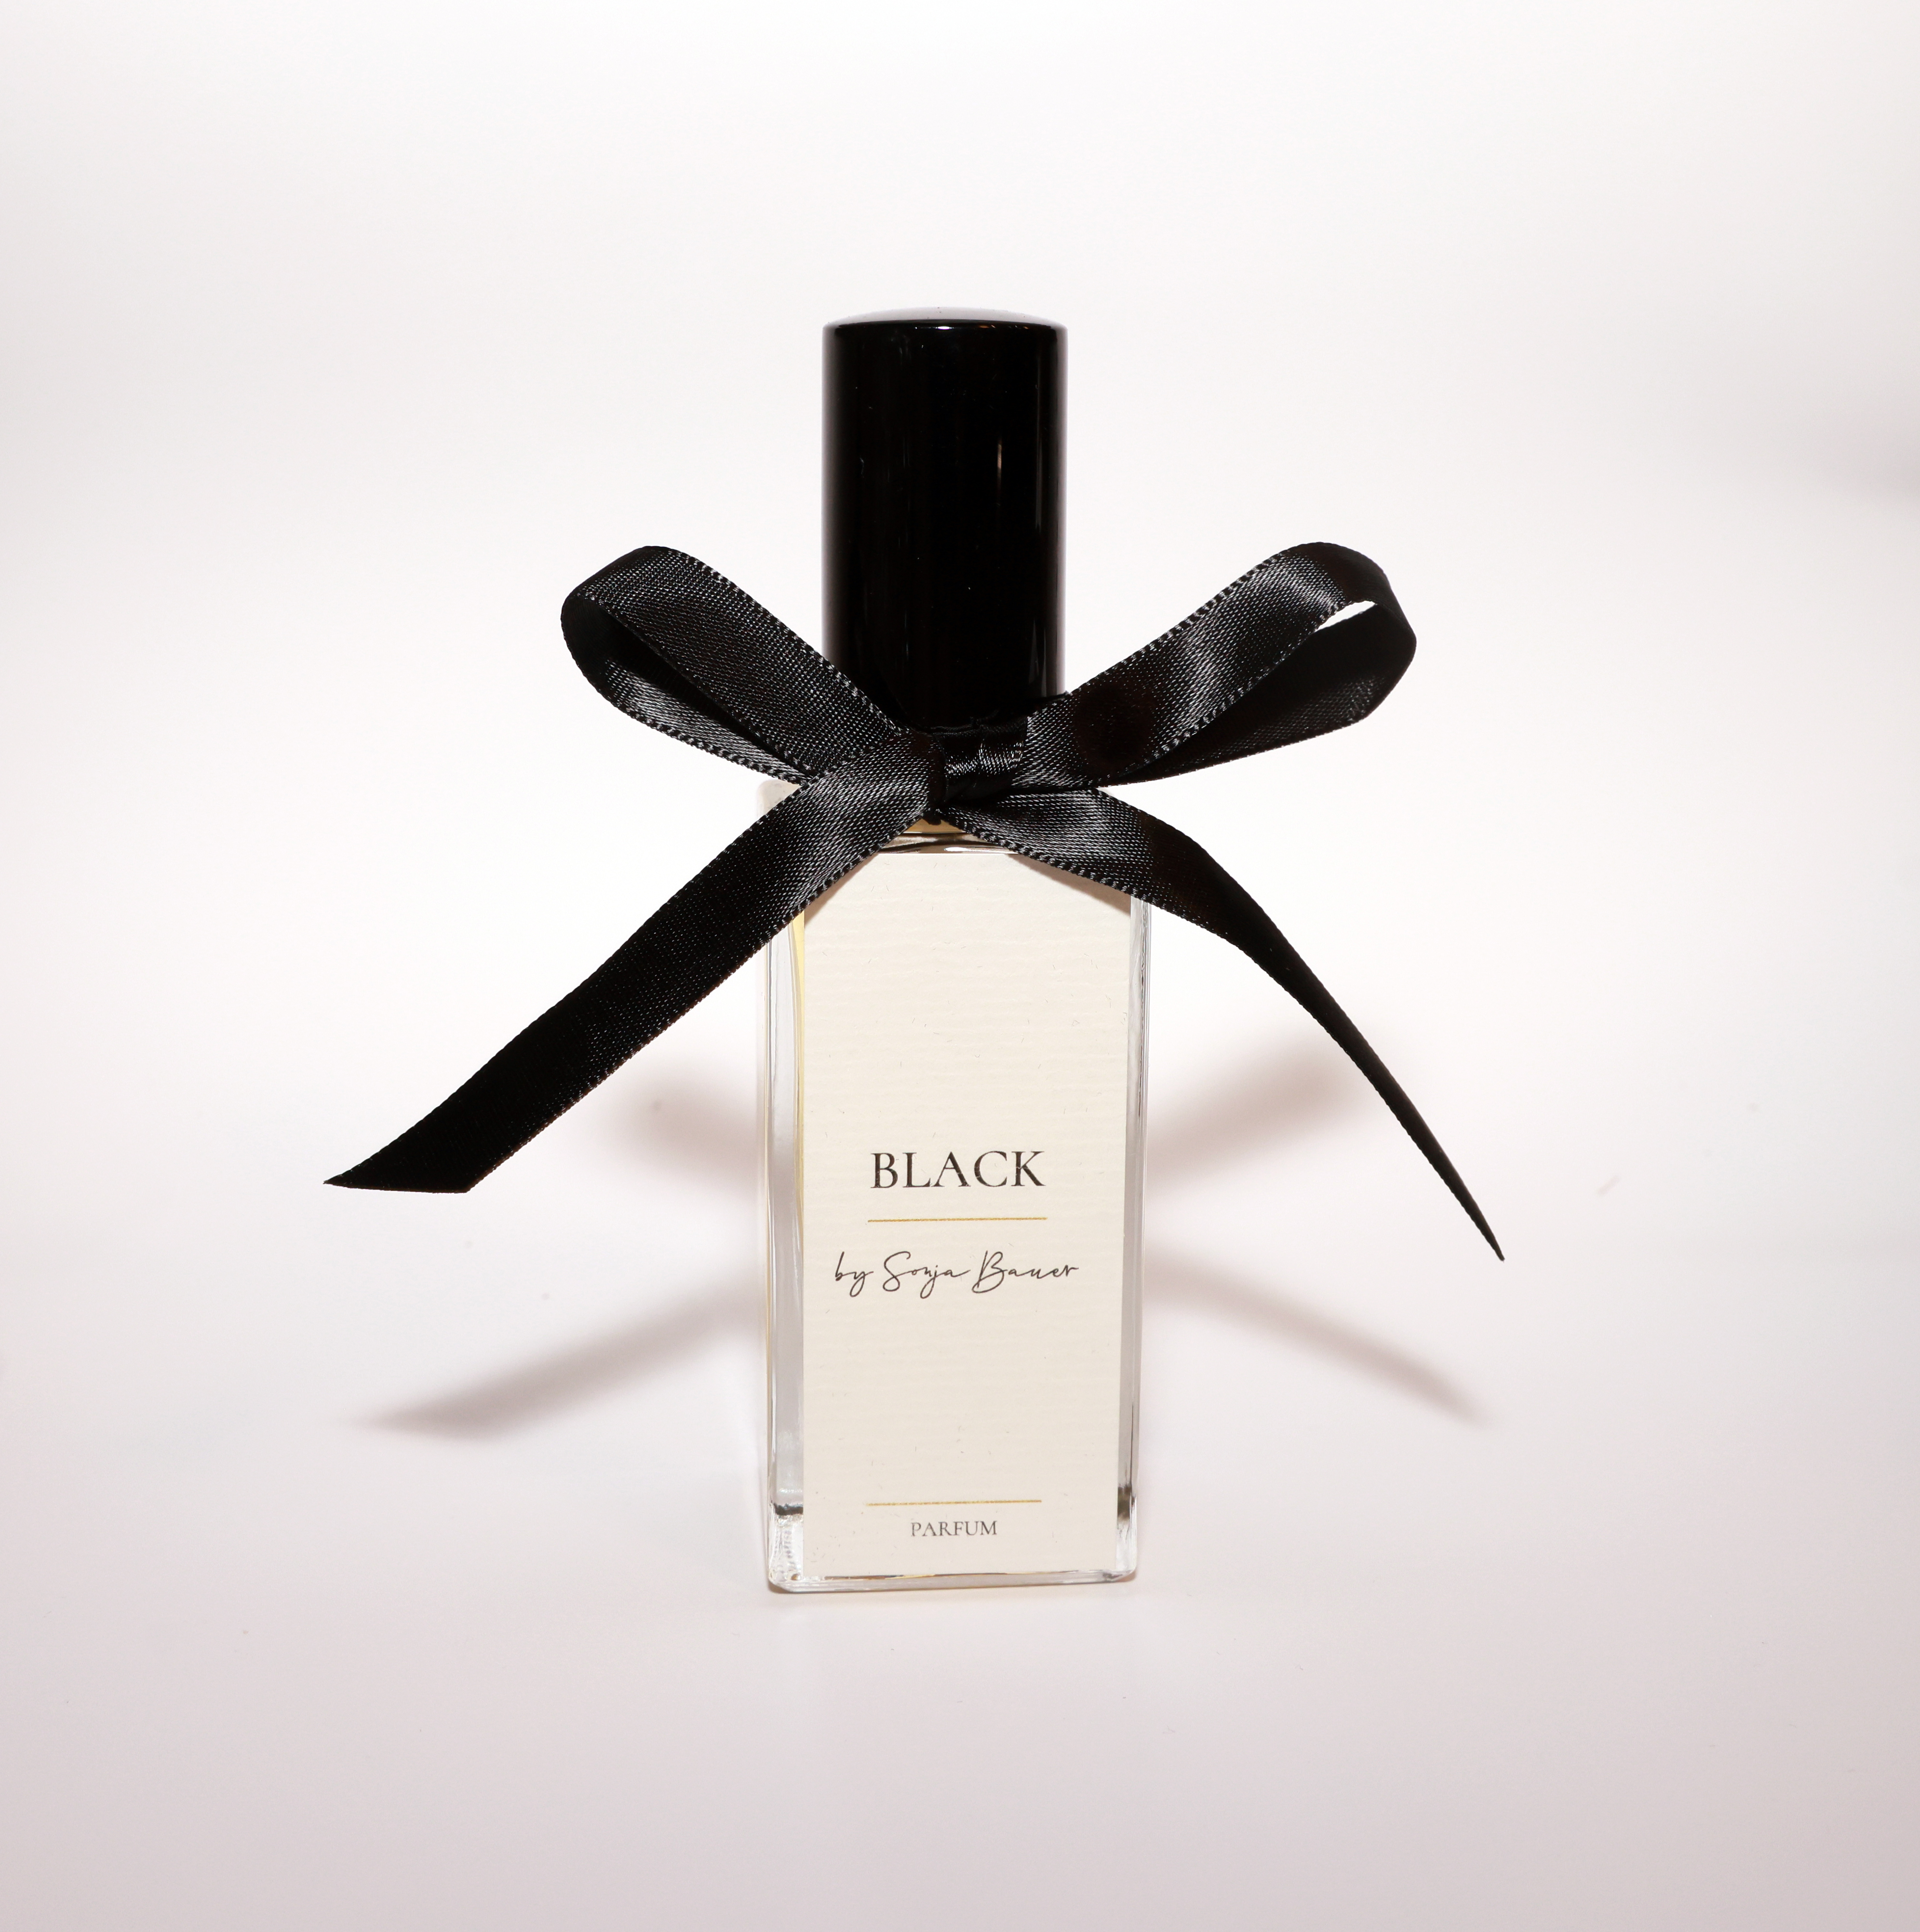 Parfüm BLACK by Sonja Bauer